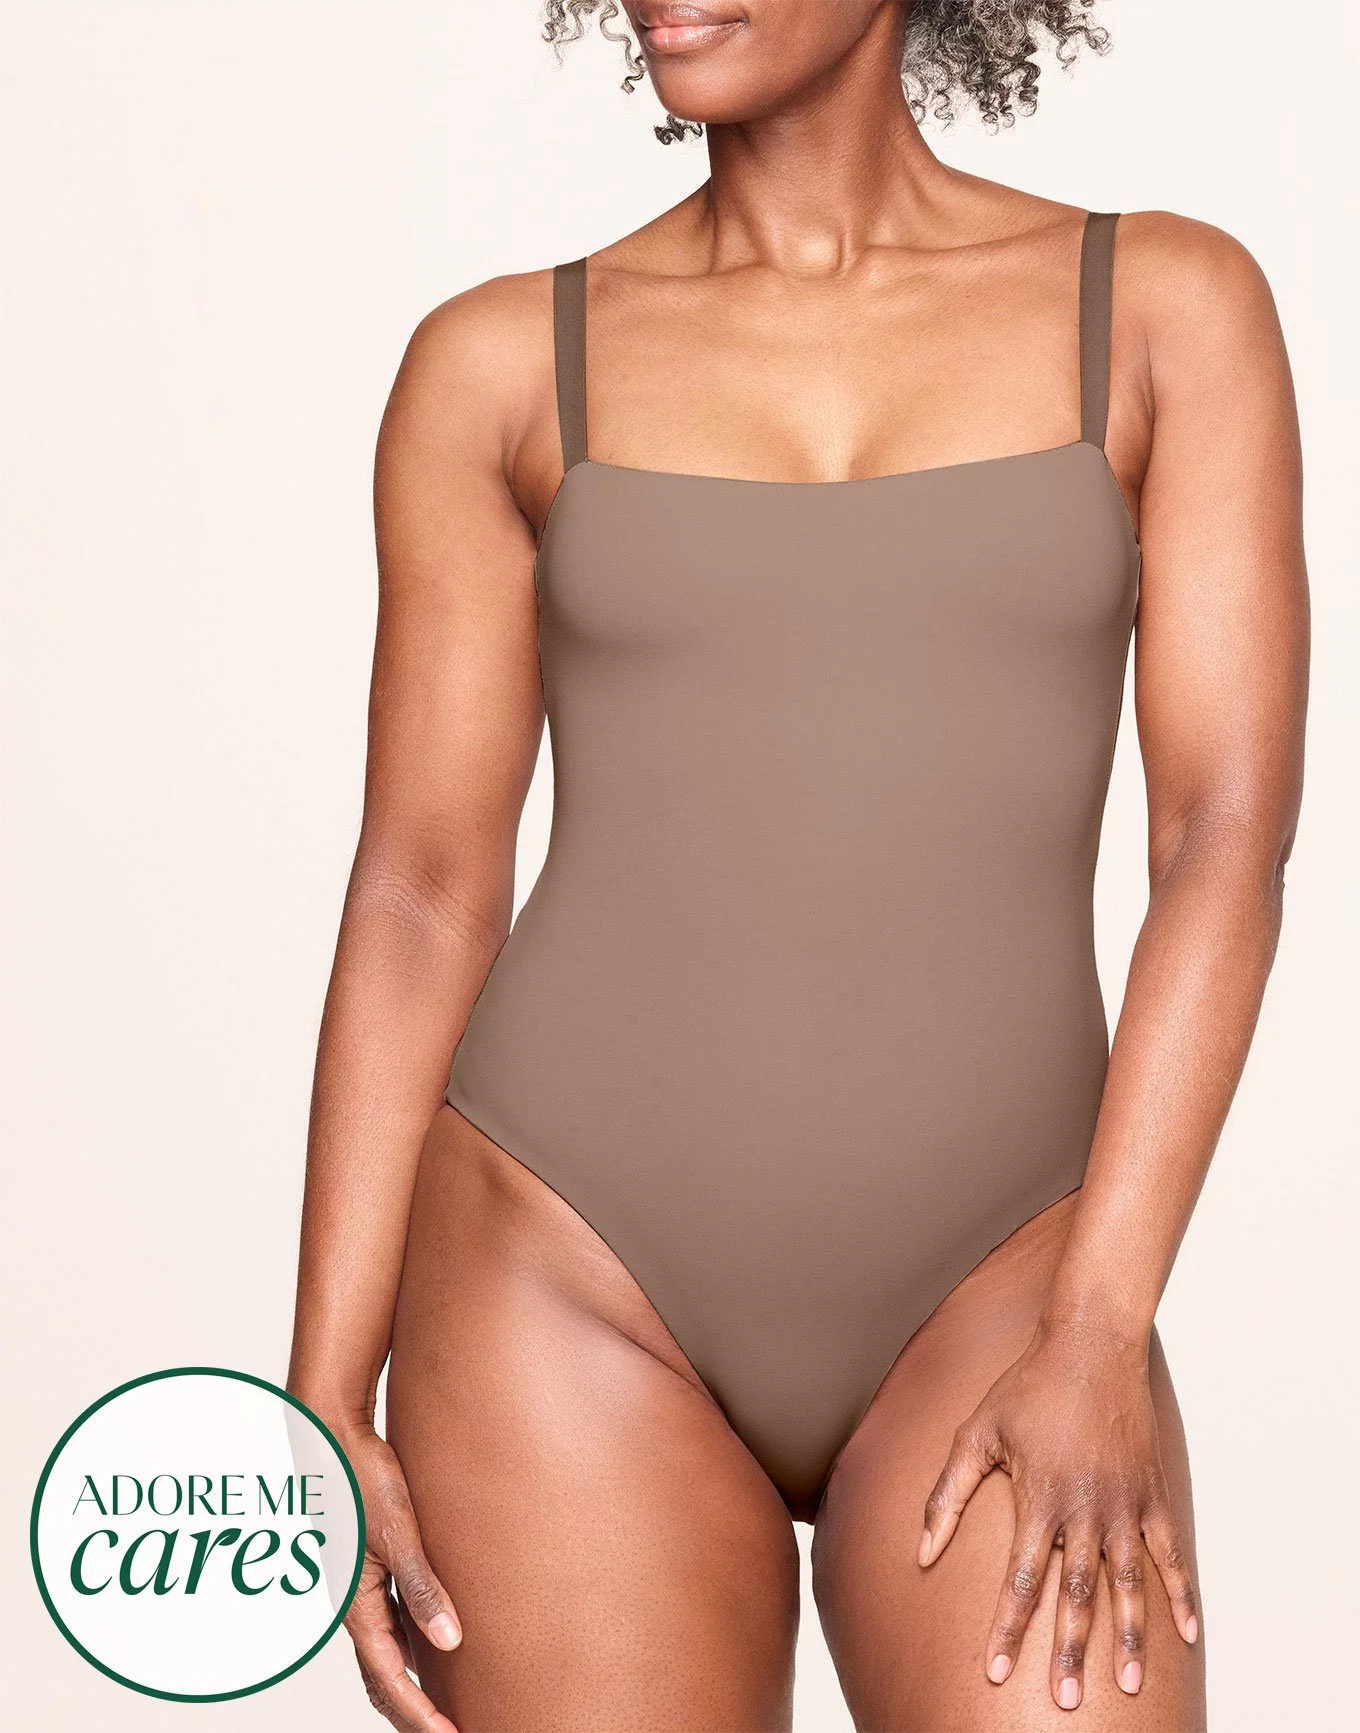 SPANX Bodysuit Women's Shapewear: Bodysuits, Waist Trainers & More! - Macy's